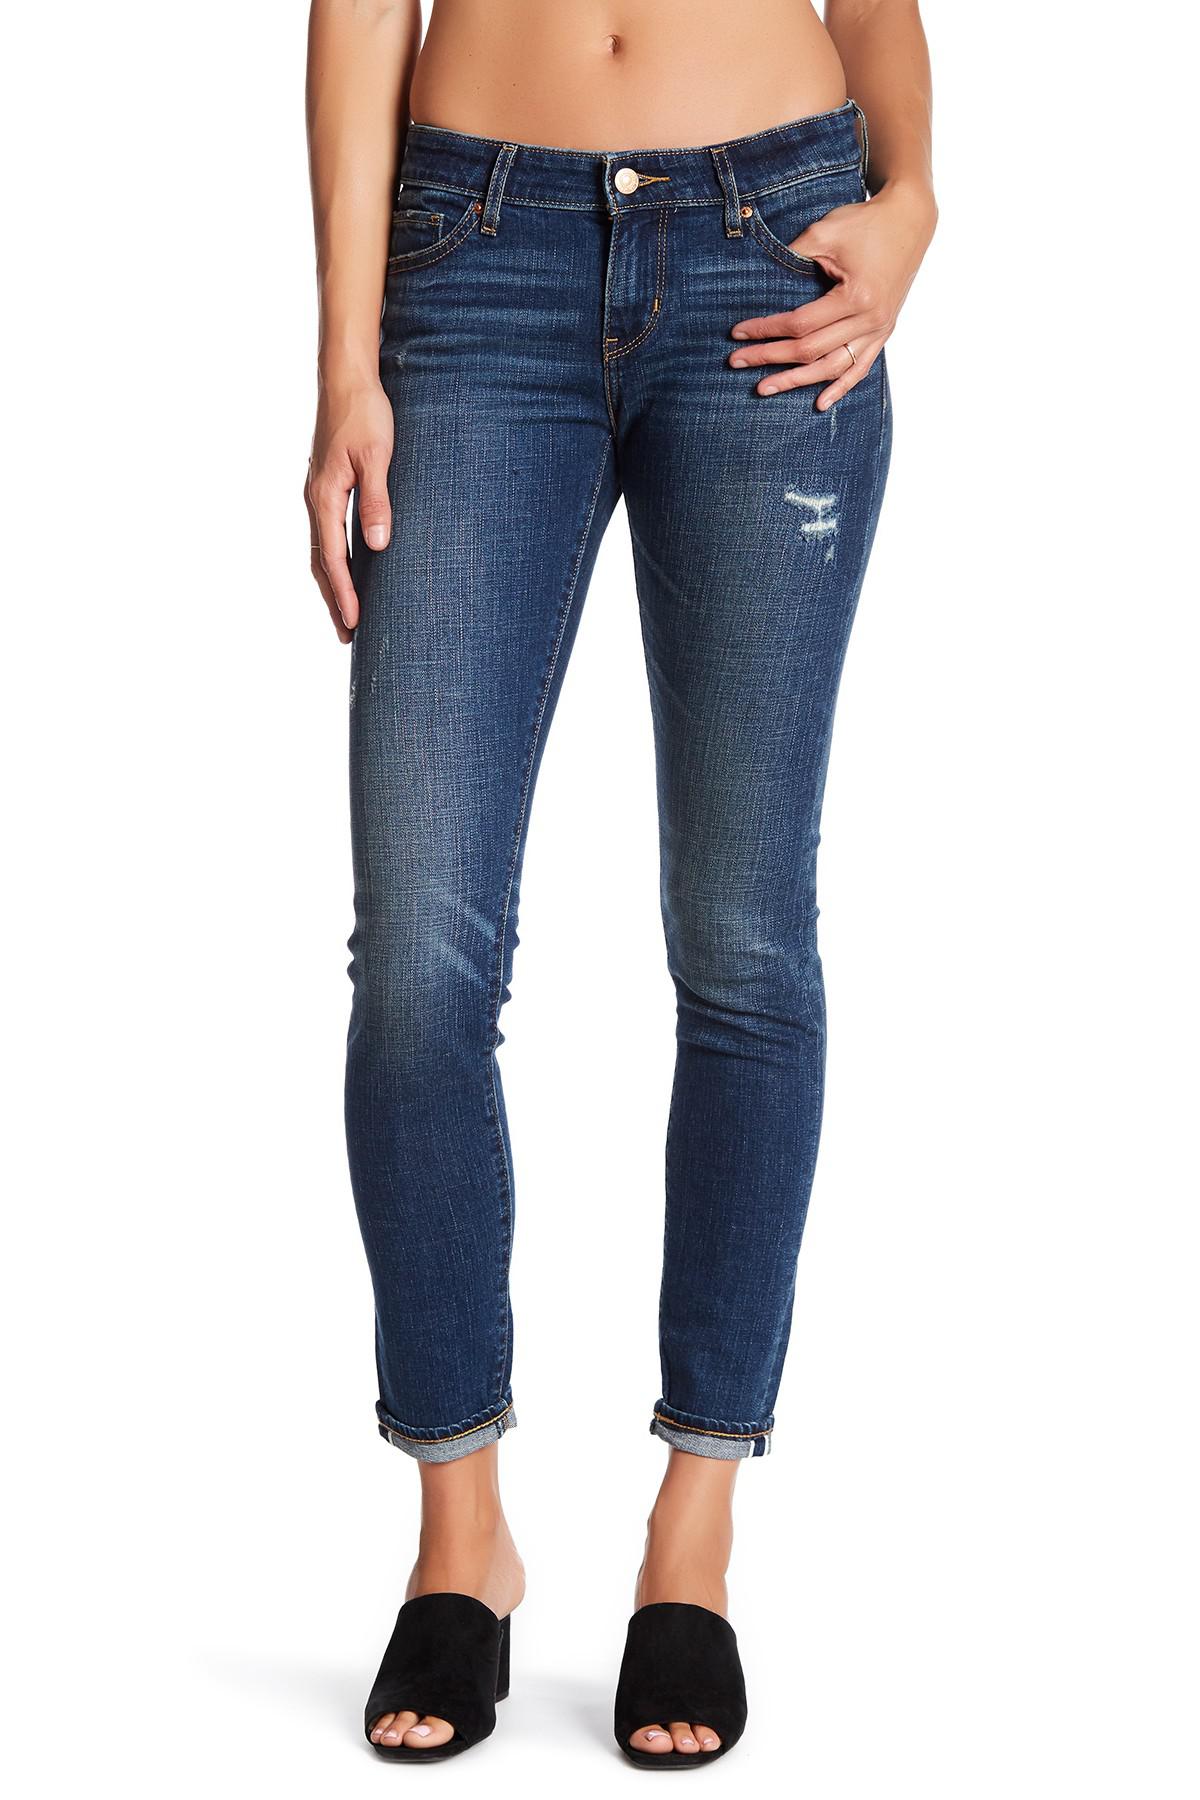 Lyst - Levi'S 711 Selvedge Skinny Jeans - 30-32